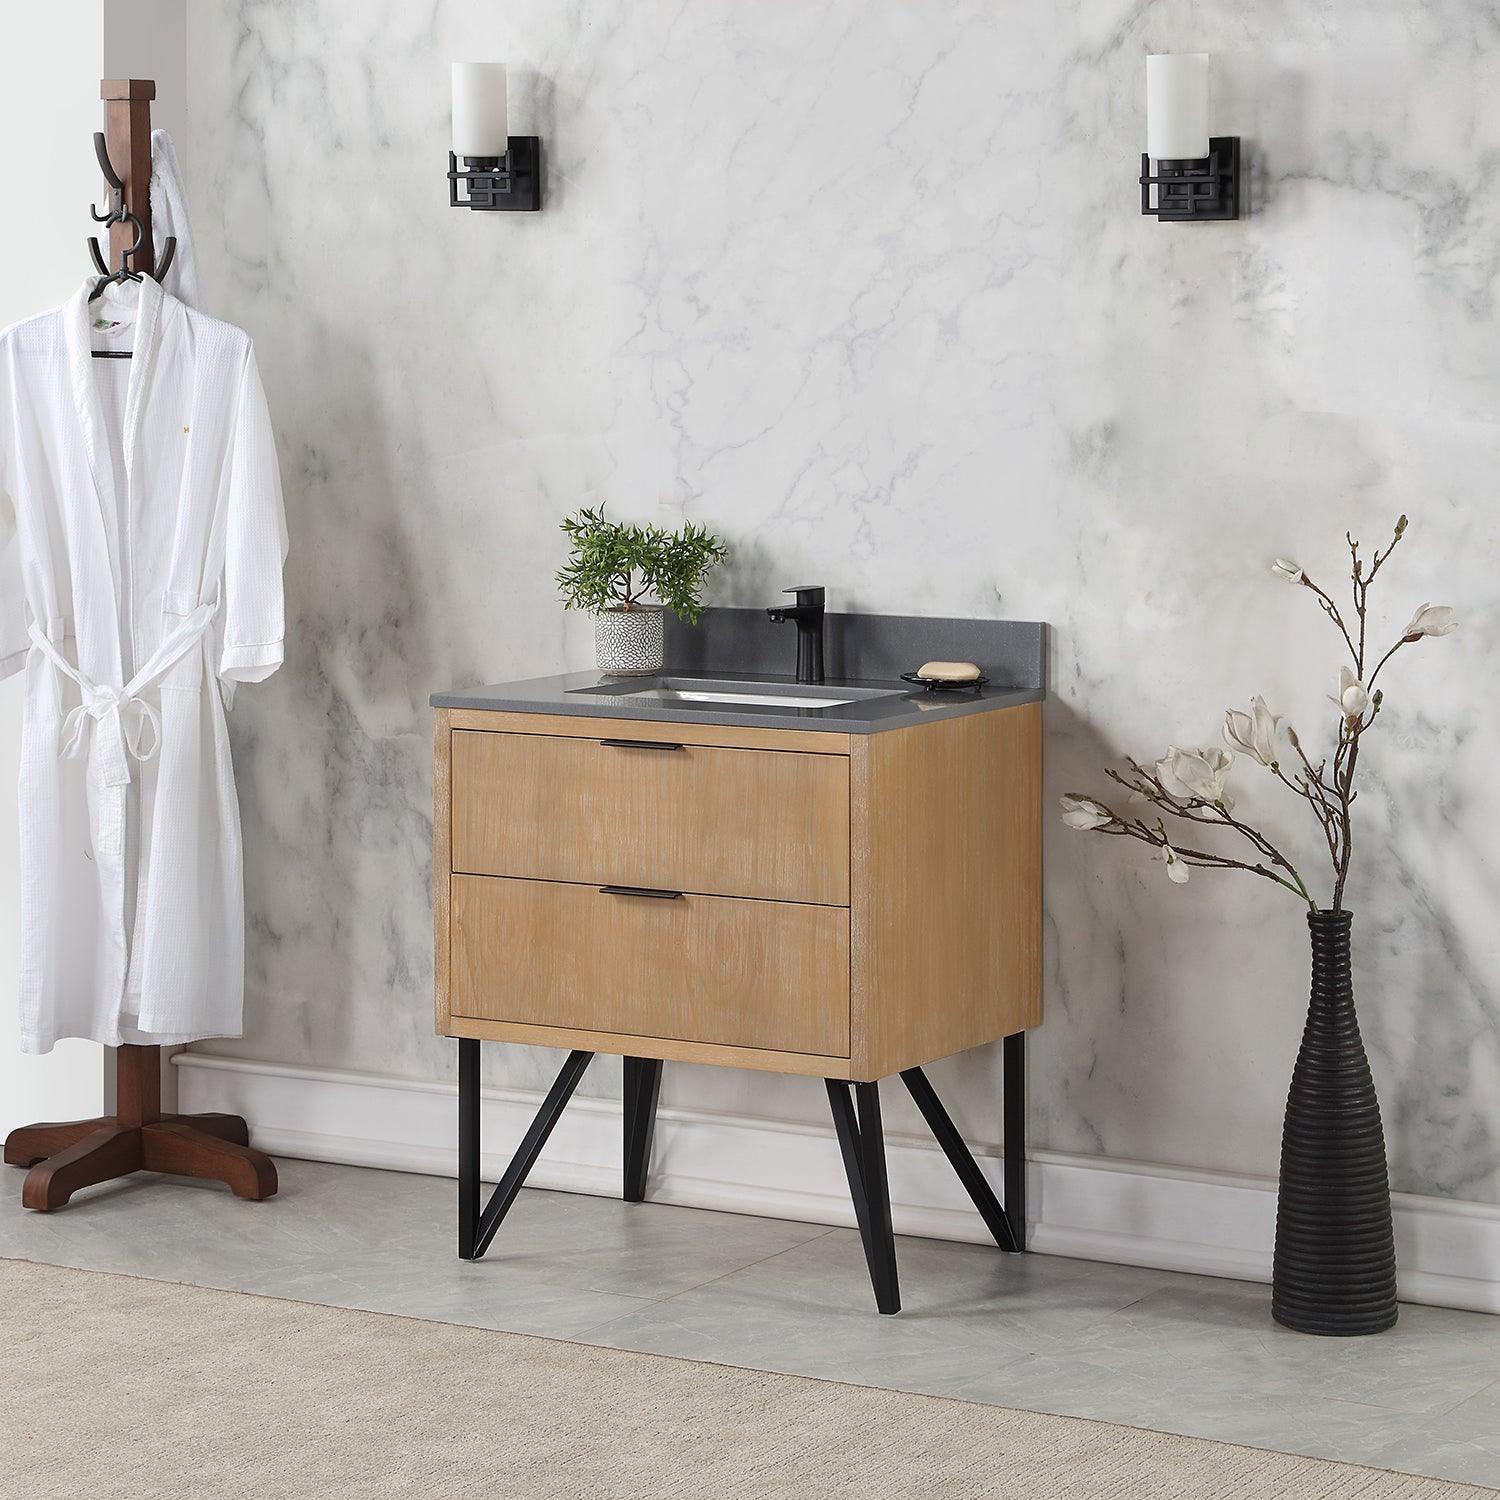 
  
  Altair Helios Single Bathroom Vanity with Composite Stone Countertop and Optional Mirror
  
